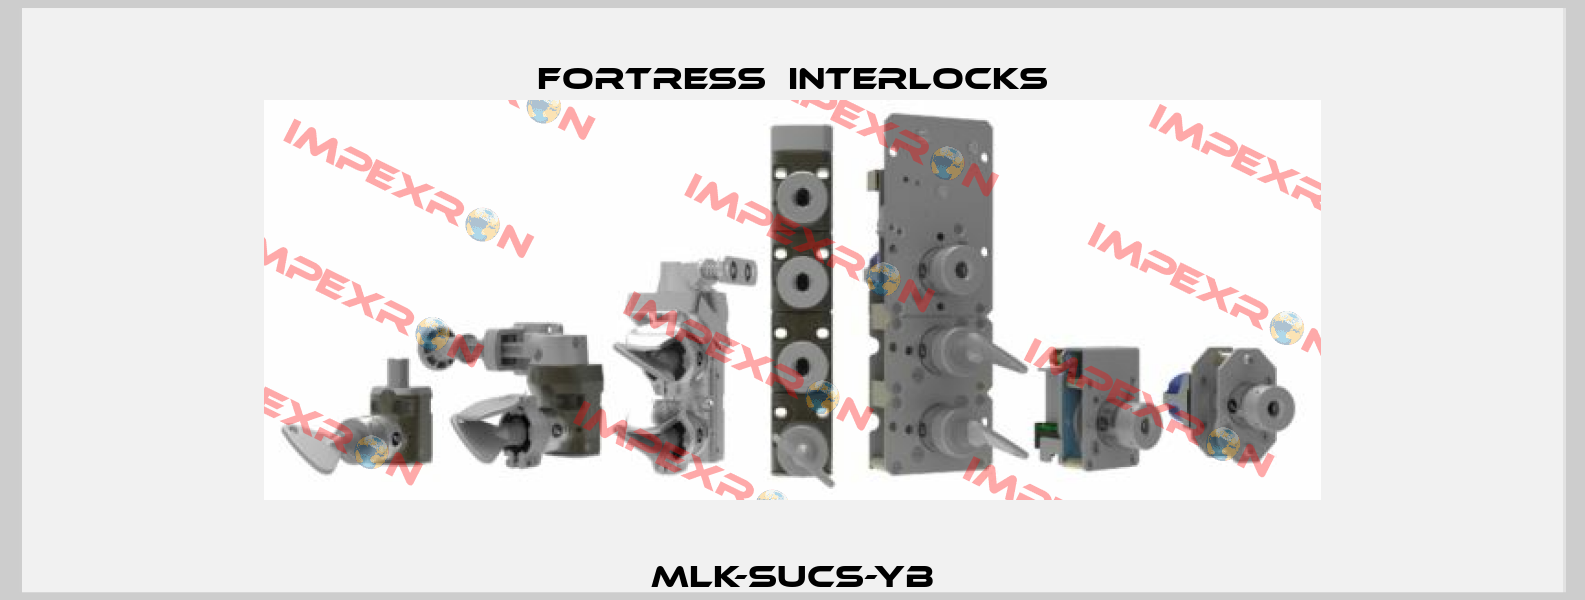 MLK-SUCS-YB Fortress